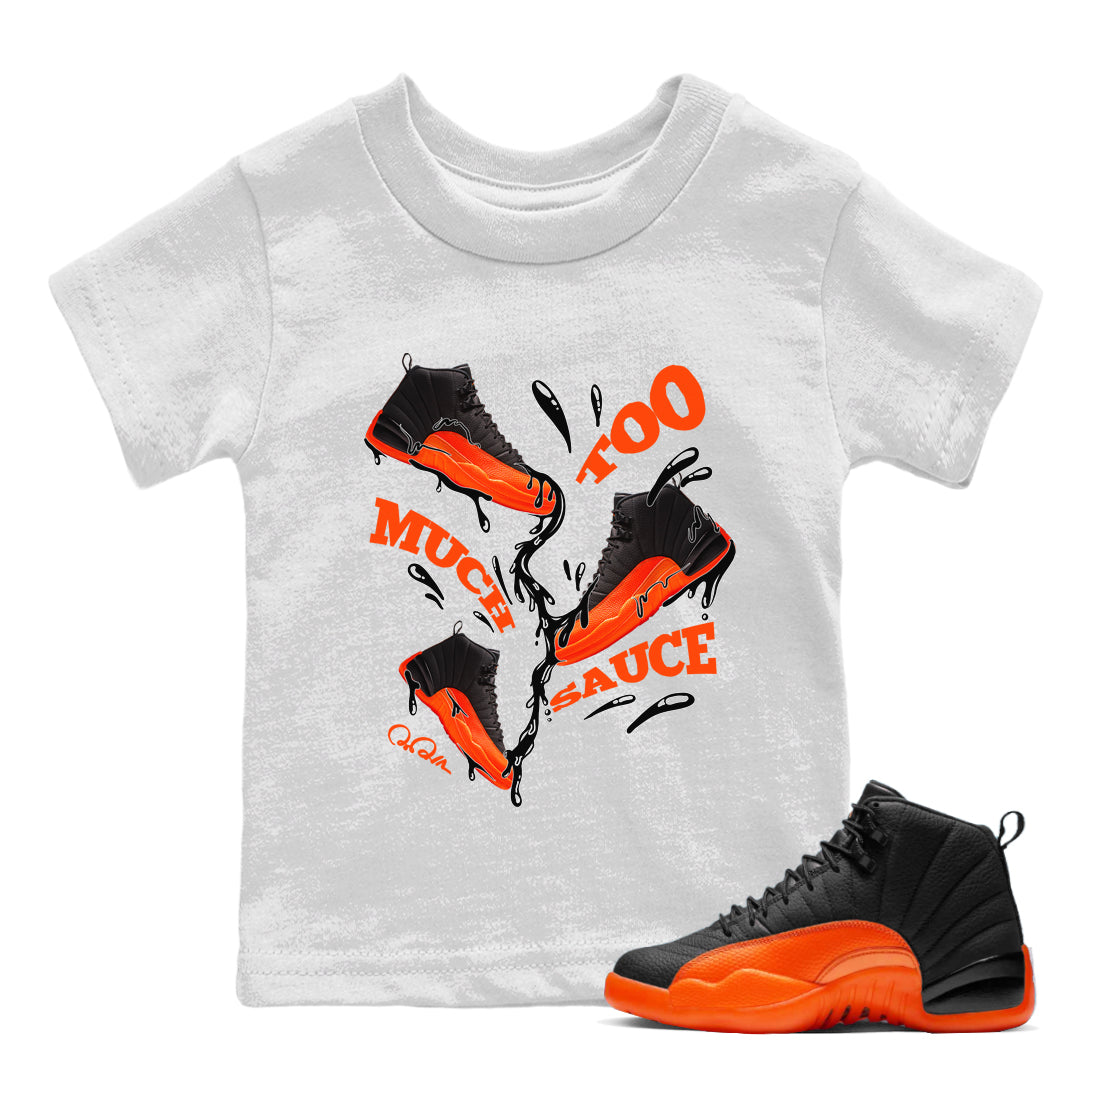 Air Jordan 12 Brilliant Orange Sneaker Match Tees Too Much Sauce Sneaker Tees AJ12 Brilliant Orange Sneaker Release Tees Kids Shirts White 1